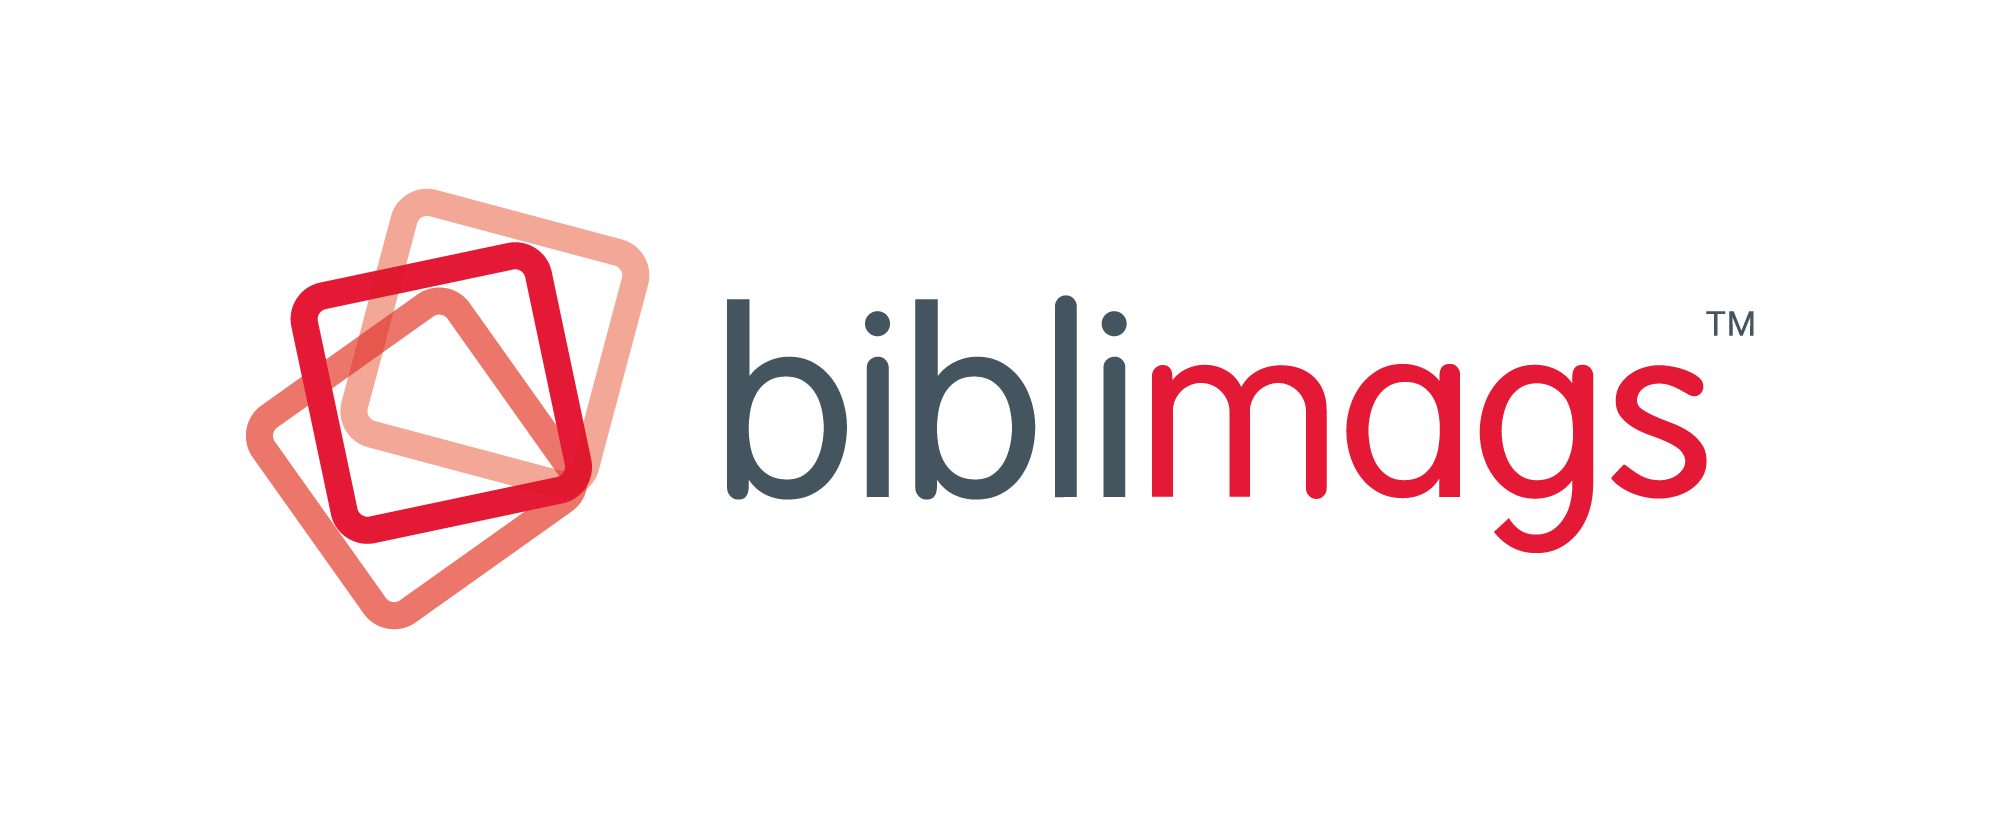 biblimags.png (45 KB)